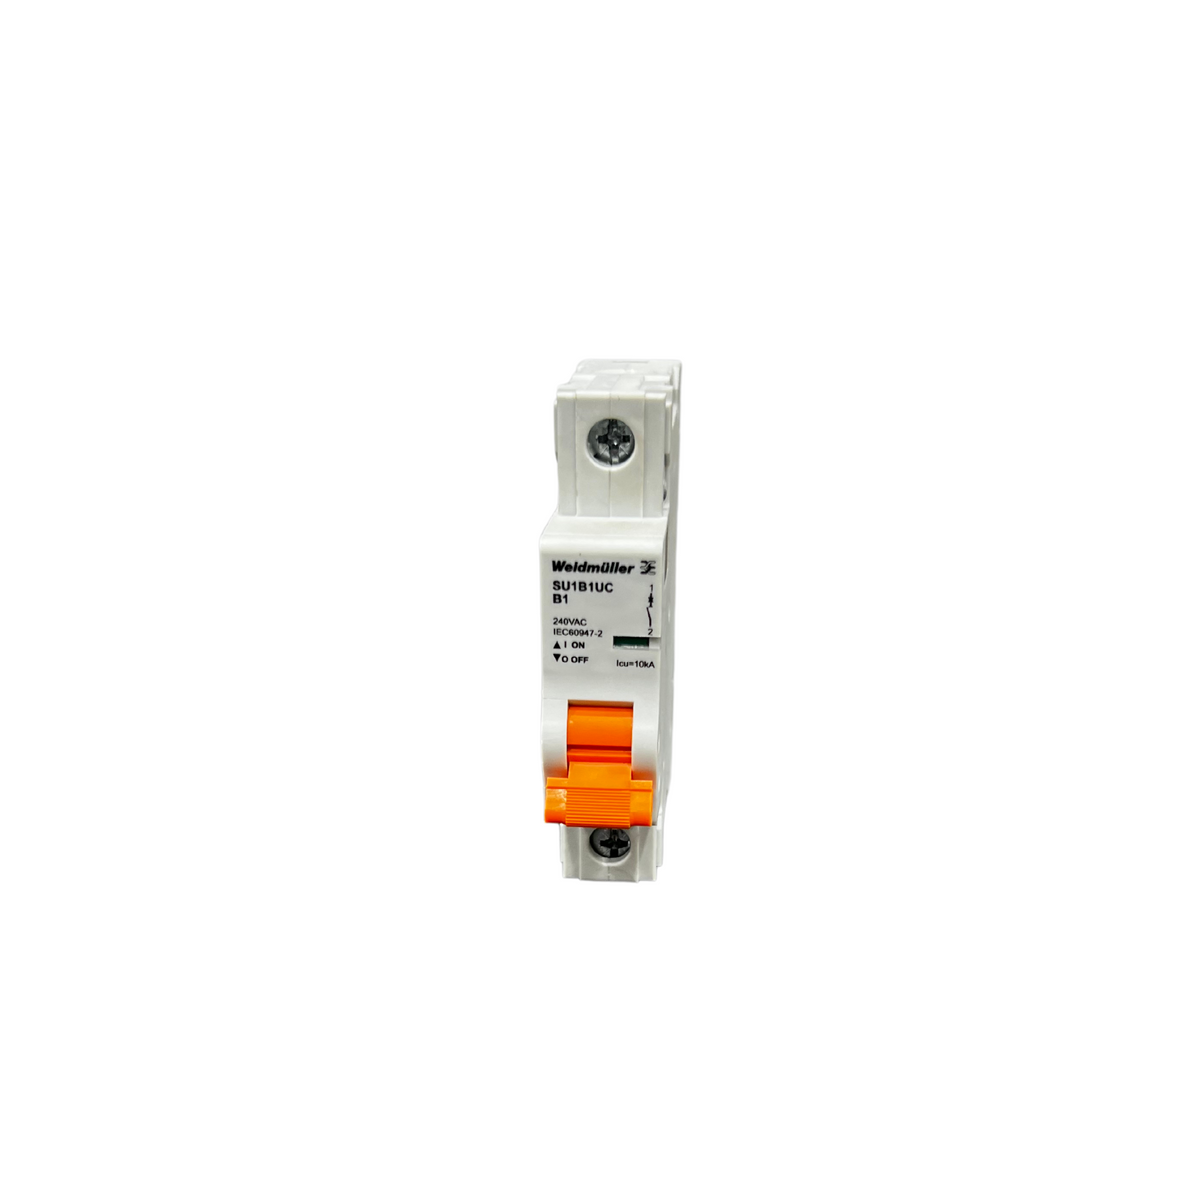 SU1B1UCB1 Circuit Breaker with orange switch